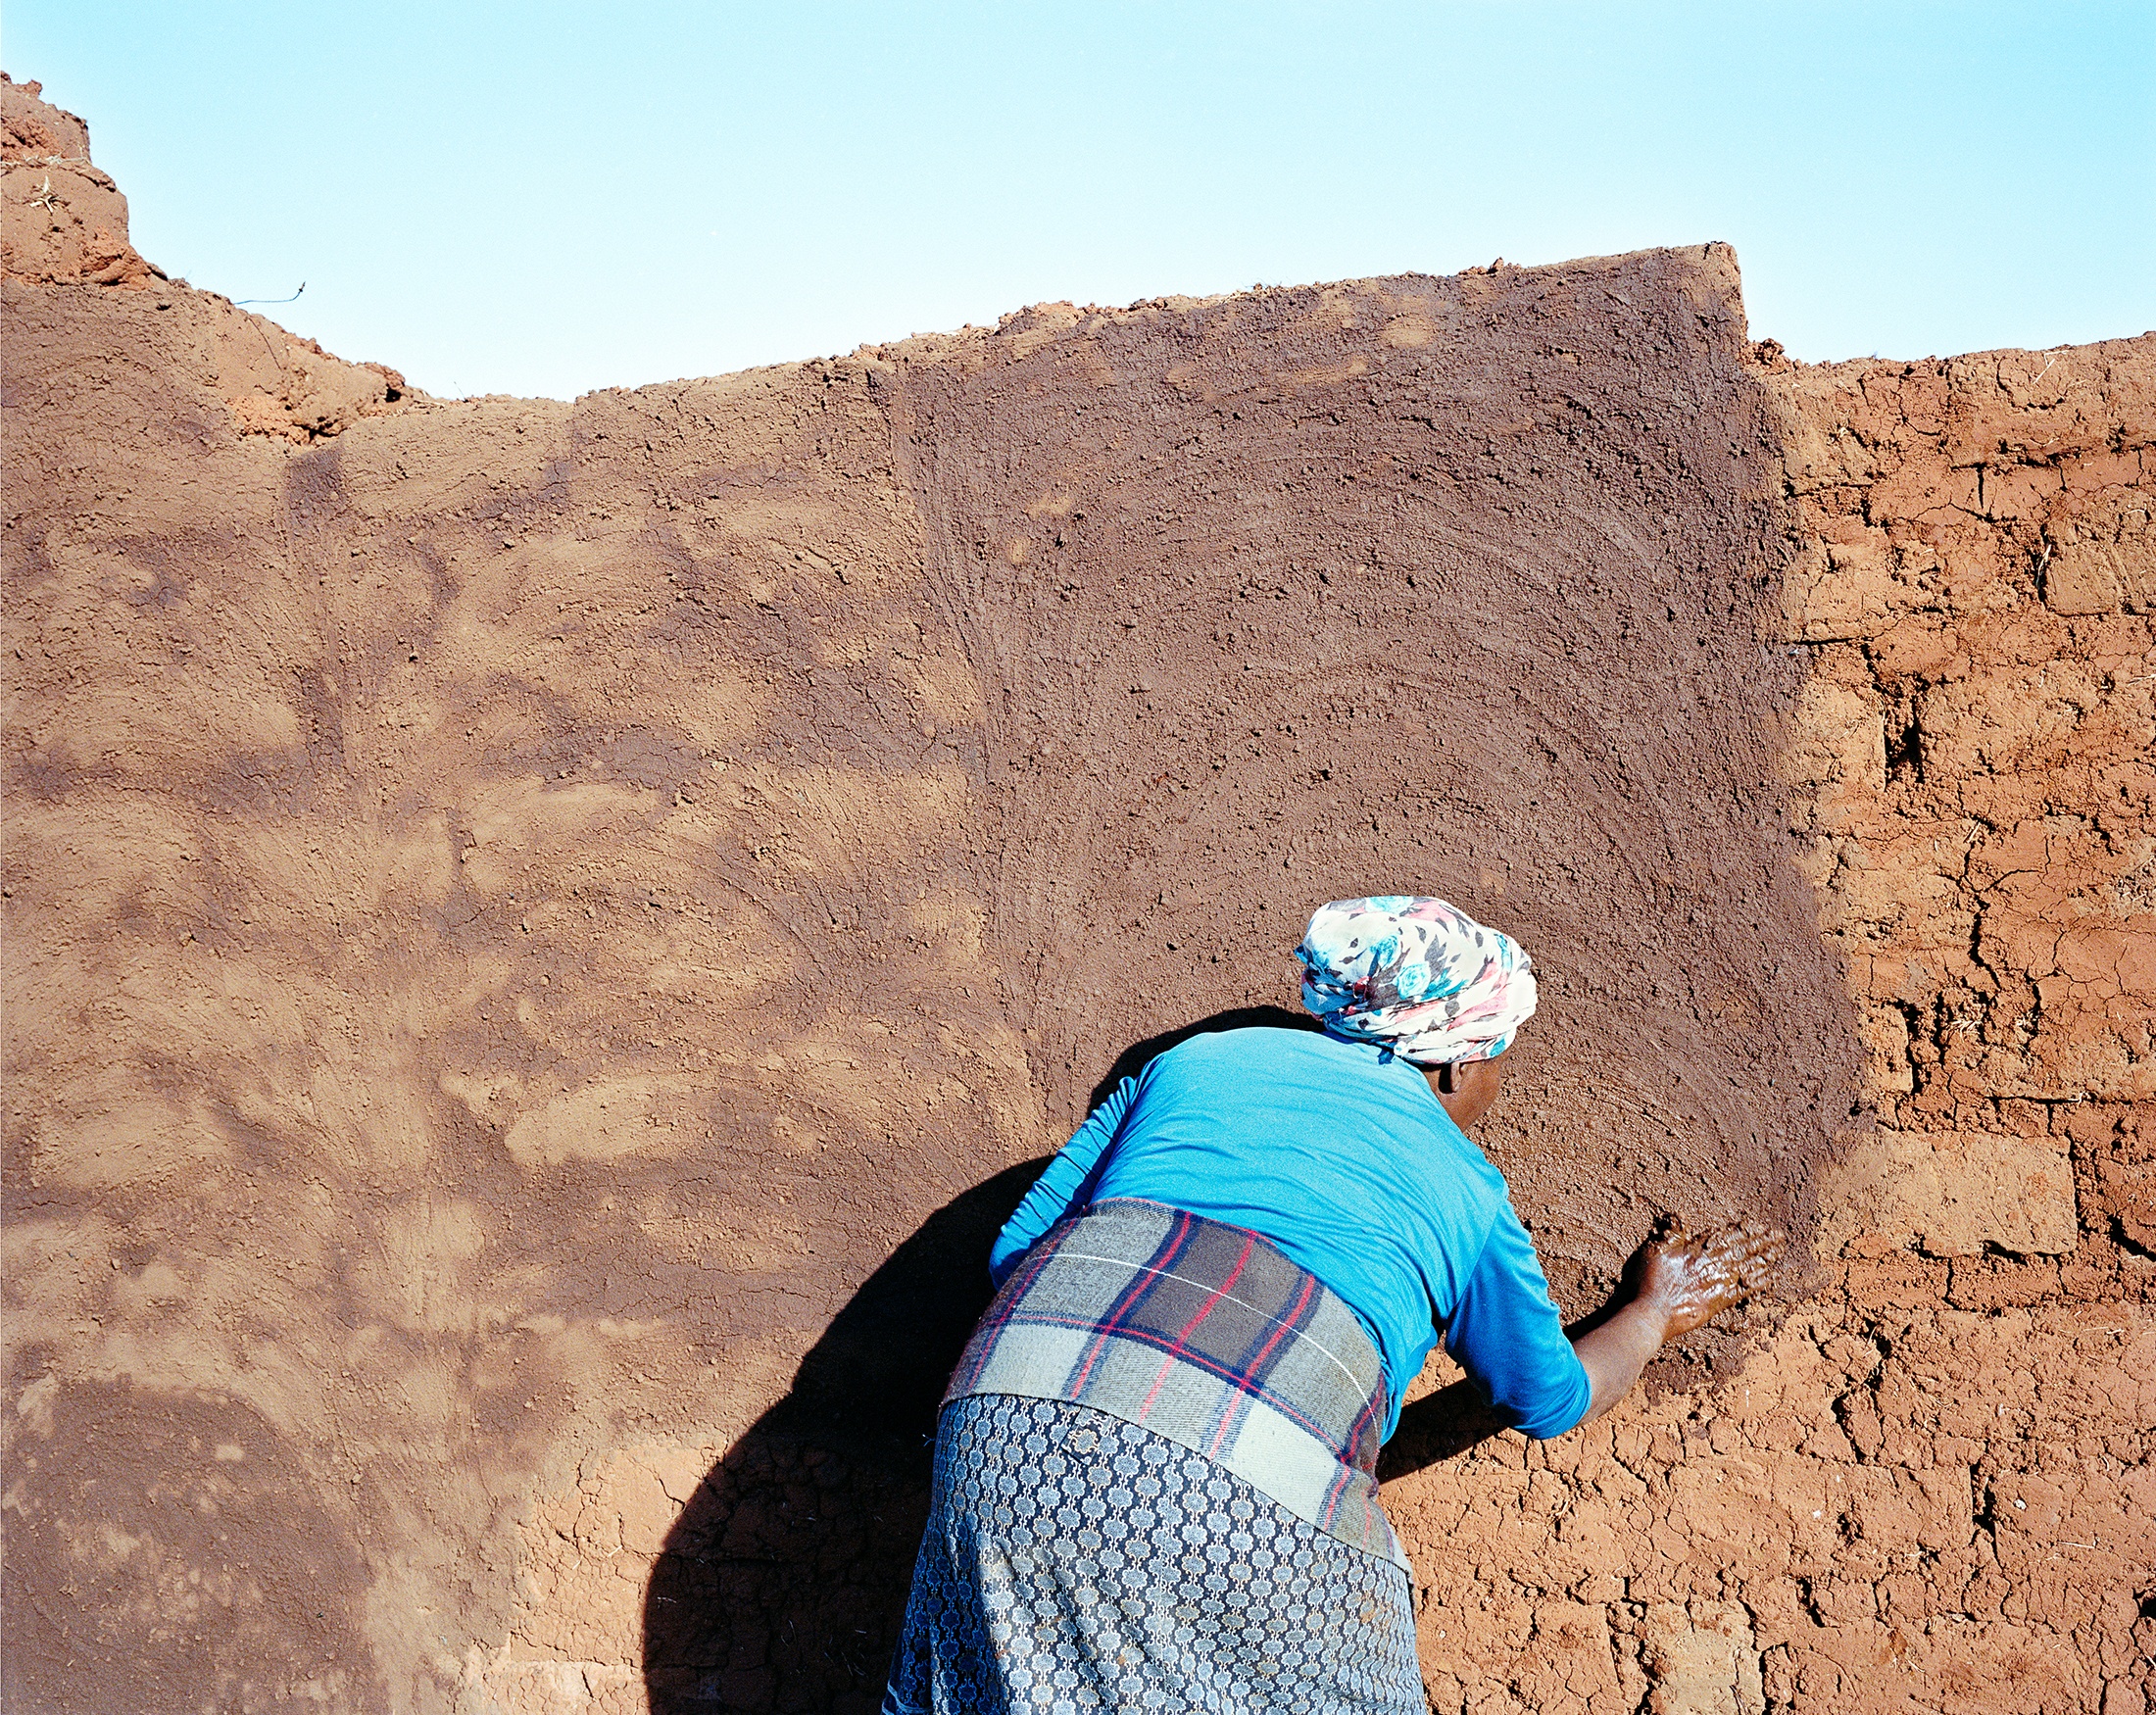 Lindokuhle Sobekwa's photograph 'UmamBhele uyatyabeka' shows an indvidual rubbing a brown substance onto a brick wall.
